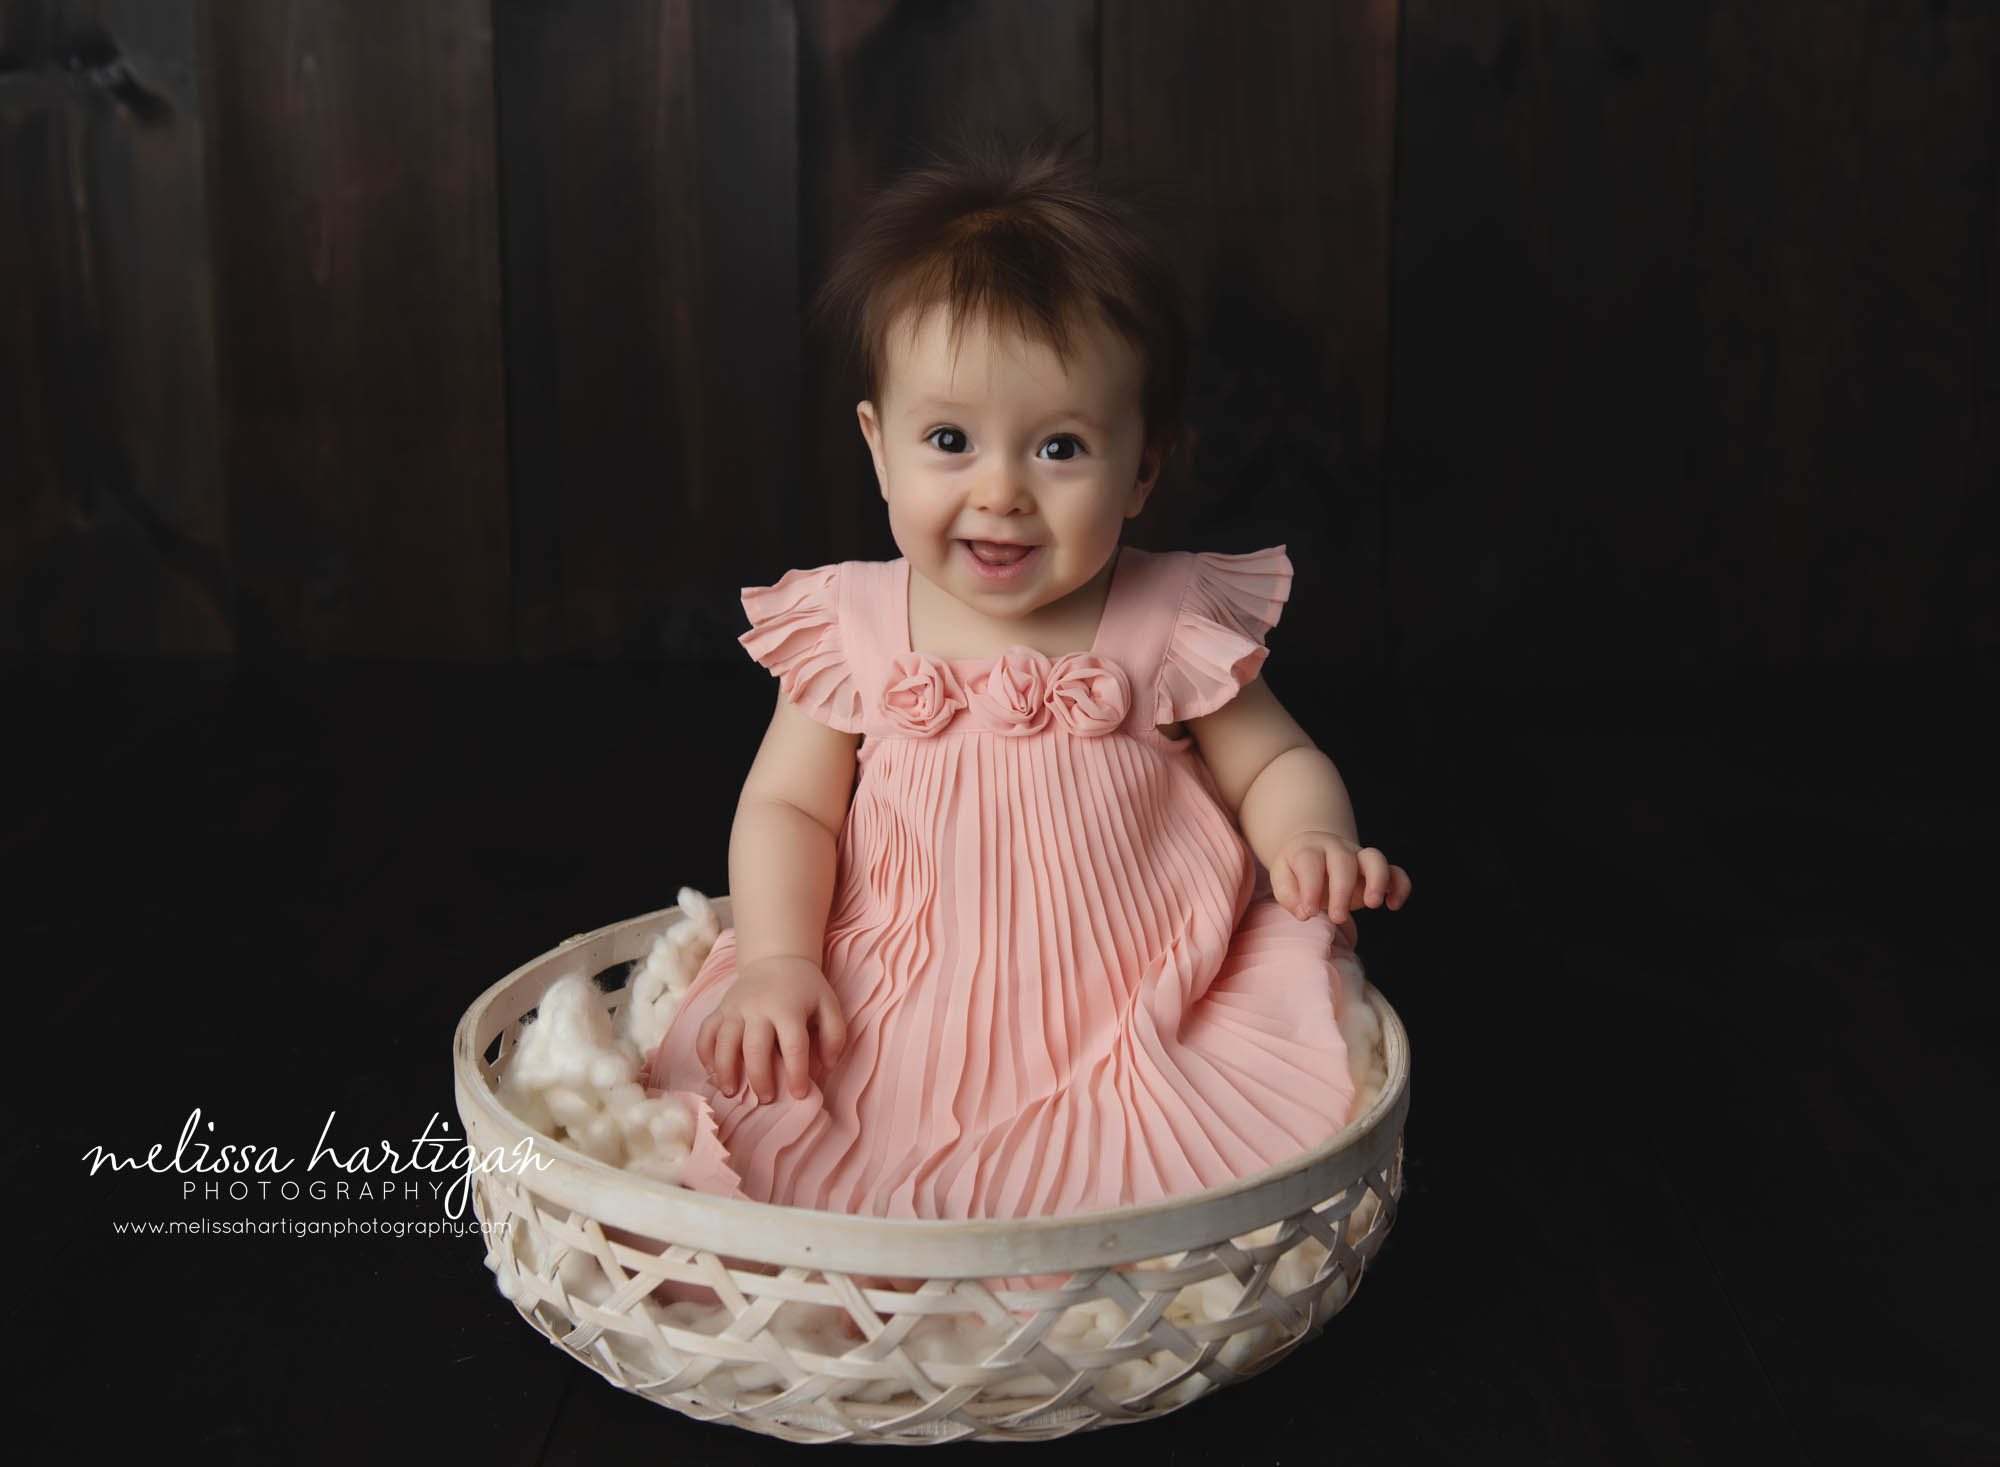 Baby girl sitting in cream wooden basket wearing pink dress with 3 rosebud flowers